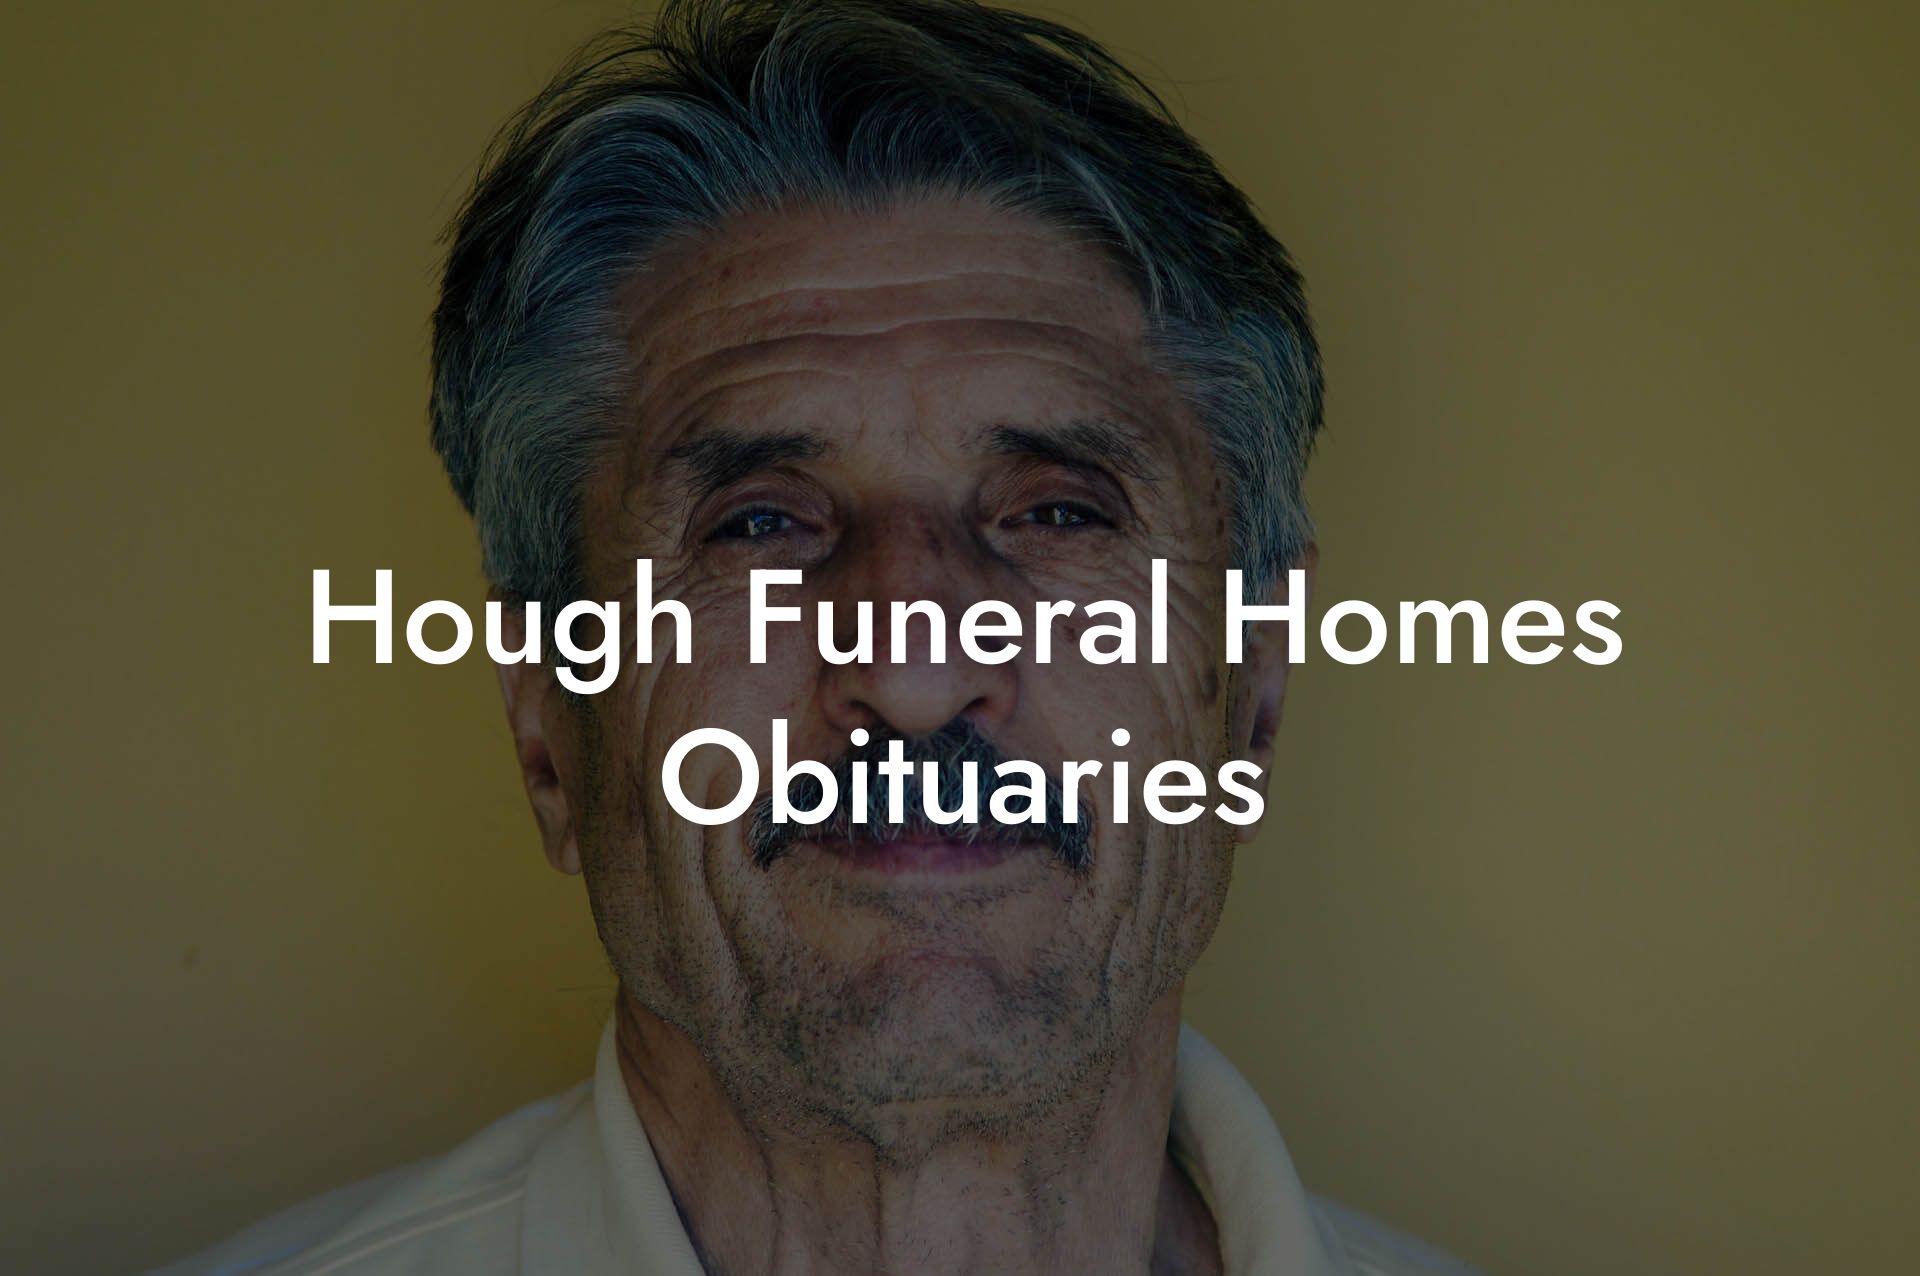 Hough Funeral Homes Obituaries